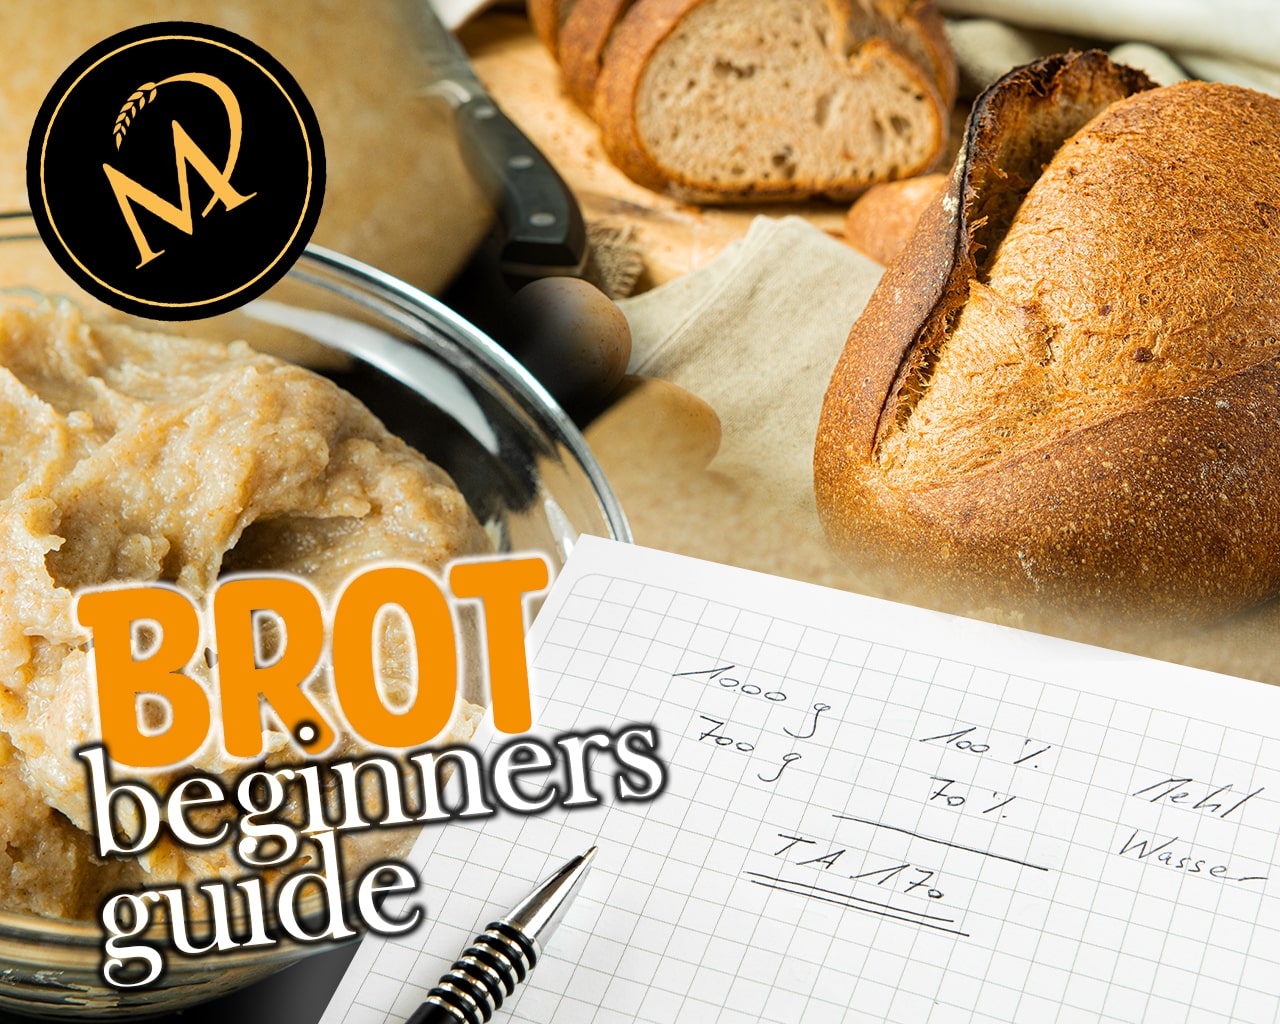 Brot beginners guide